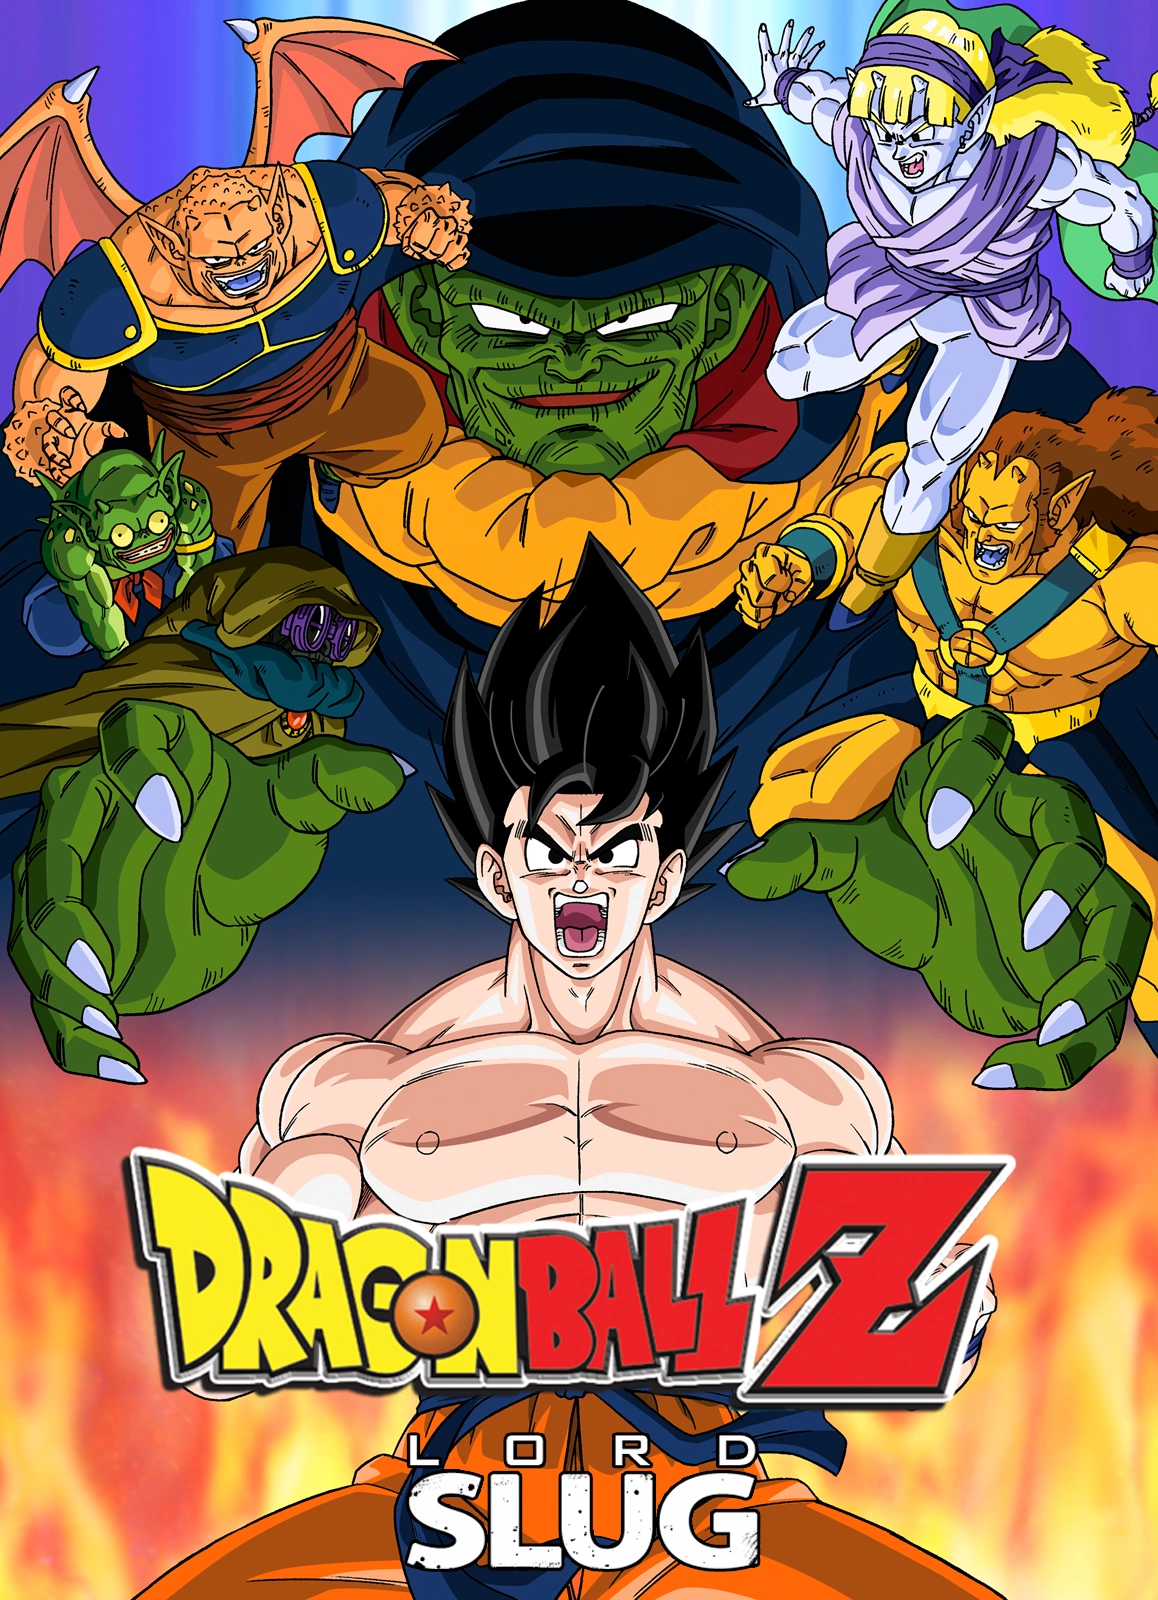 Dragon Ball Z: novos episódios dublados estreiam na Crunchyroll – ANMTV